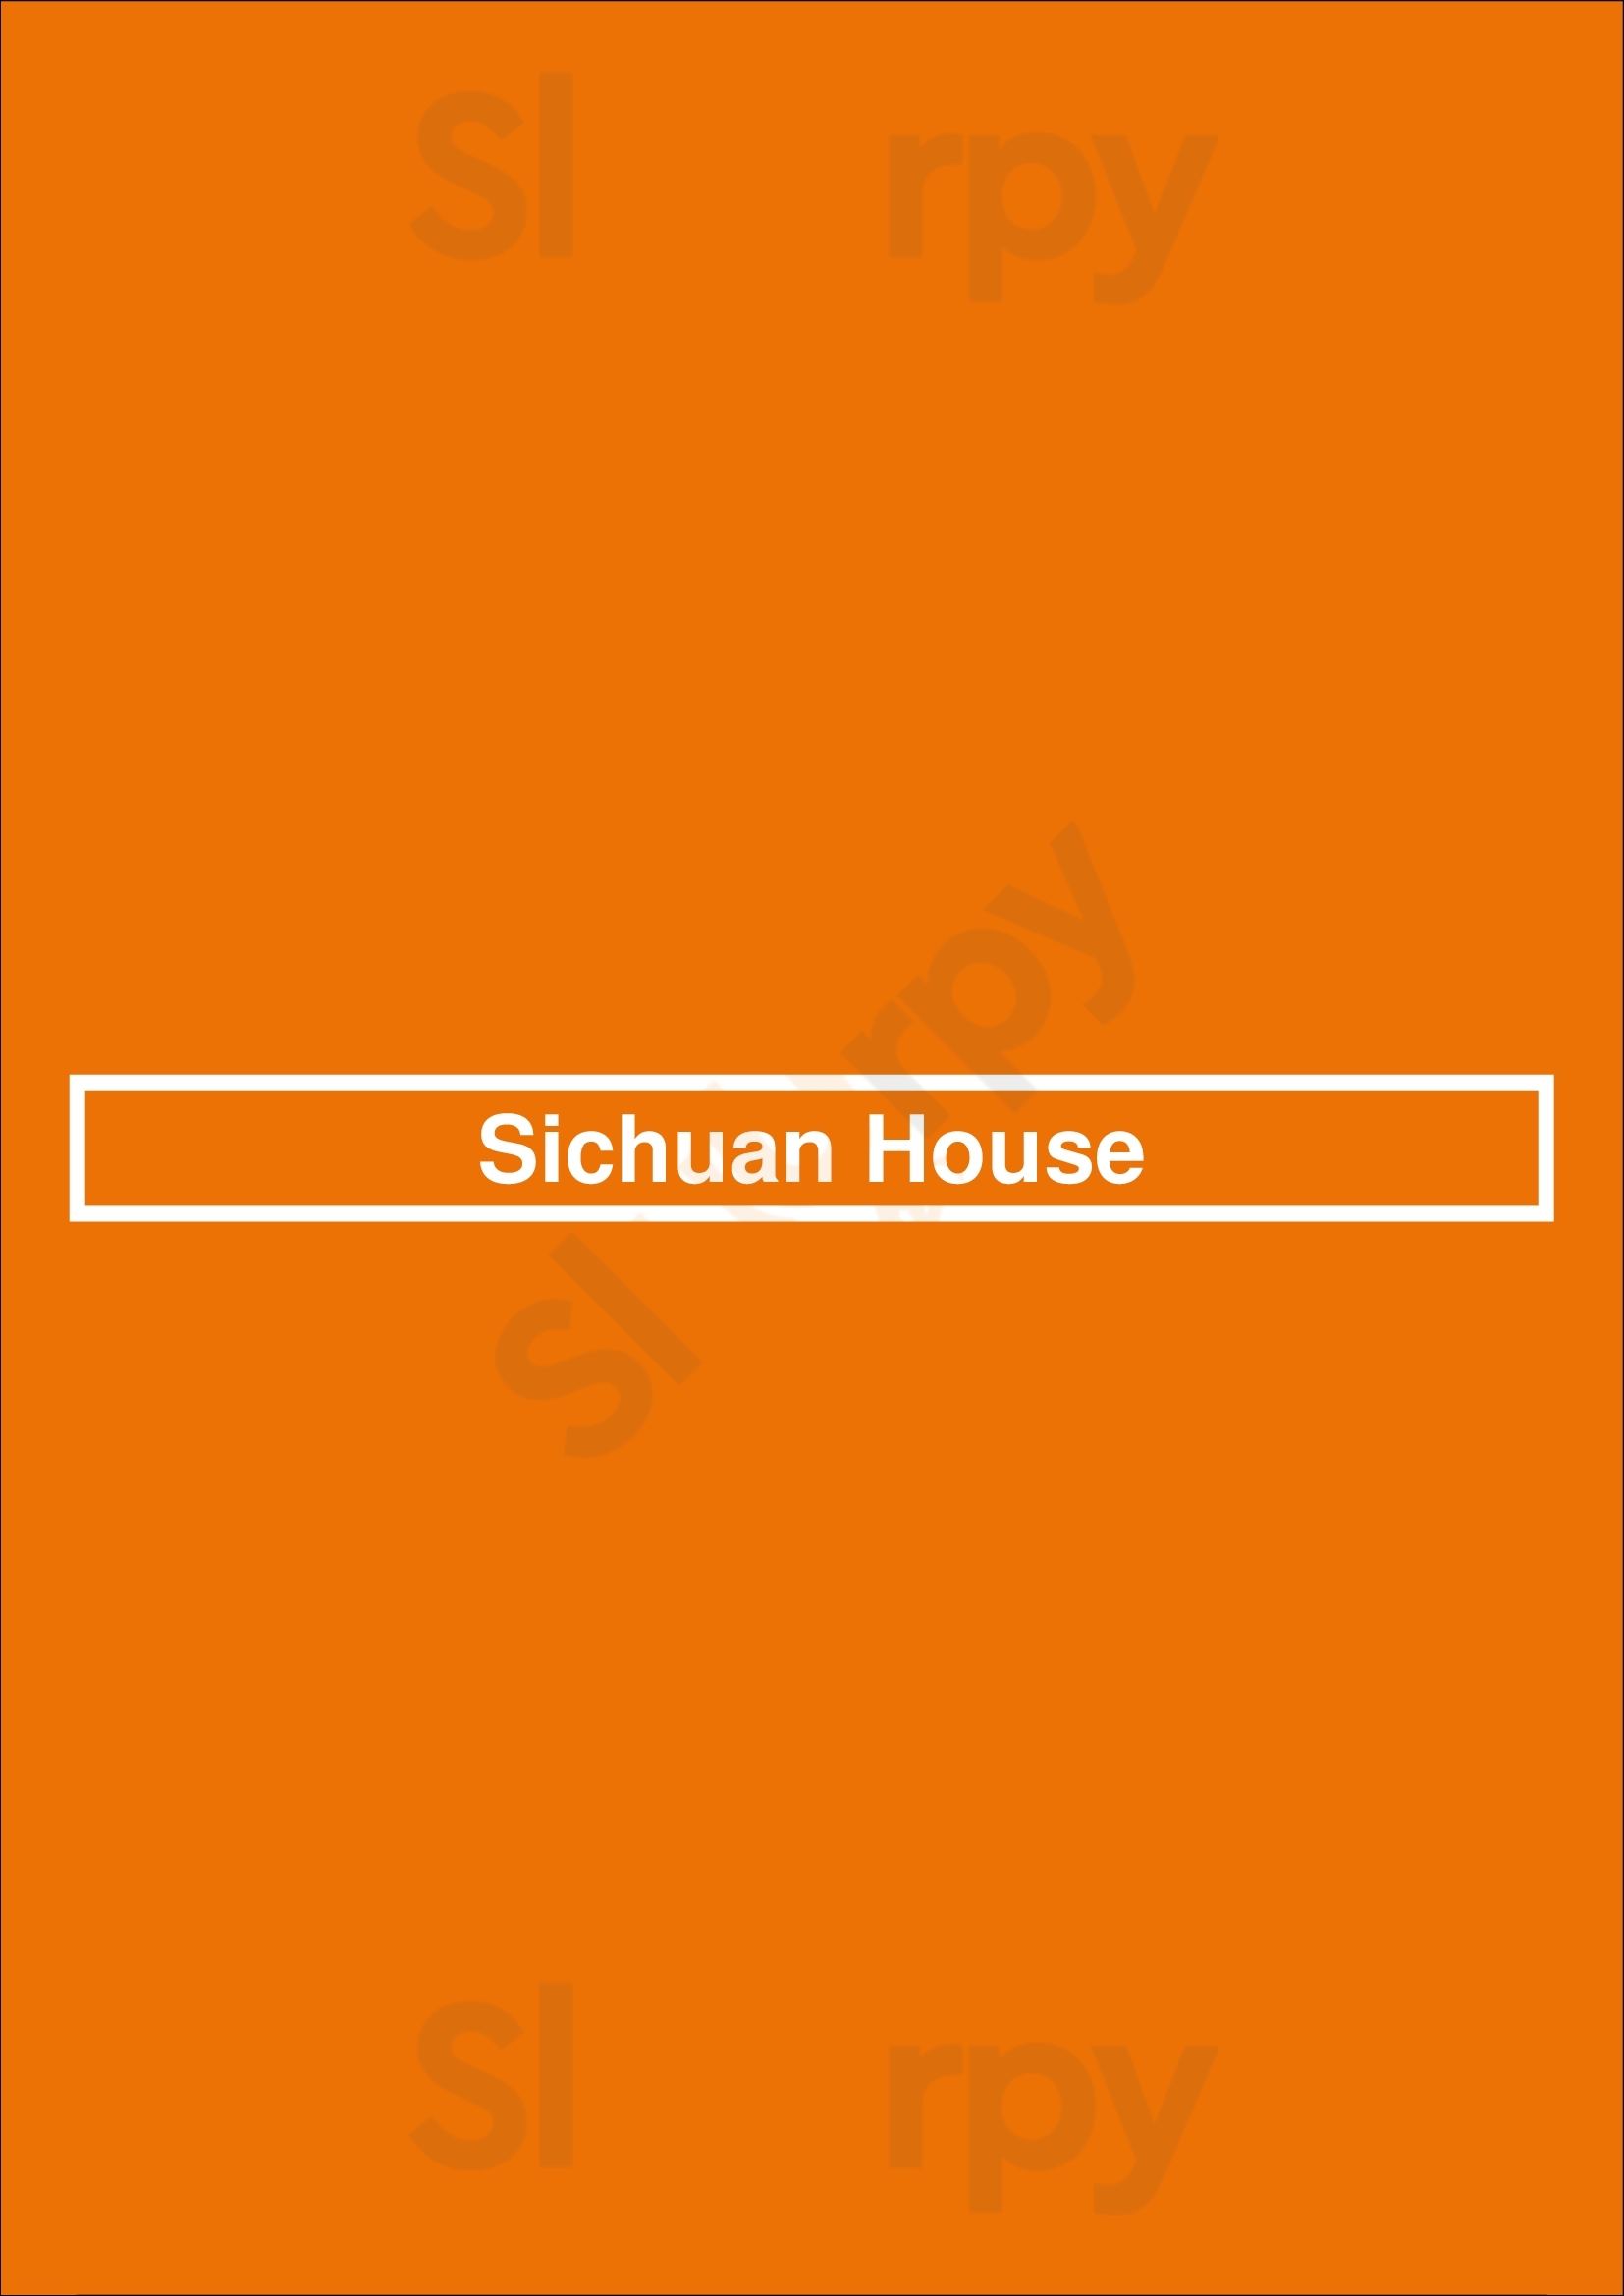 Sichuan House San Antonio Menu - 1